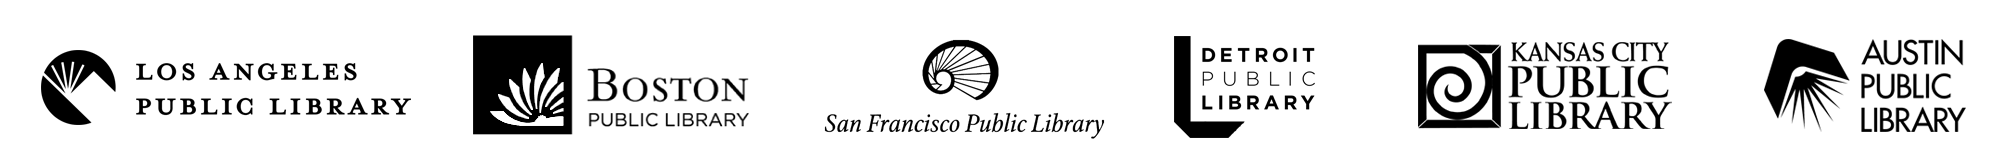 Driving-Tests.org Library Partner Logos